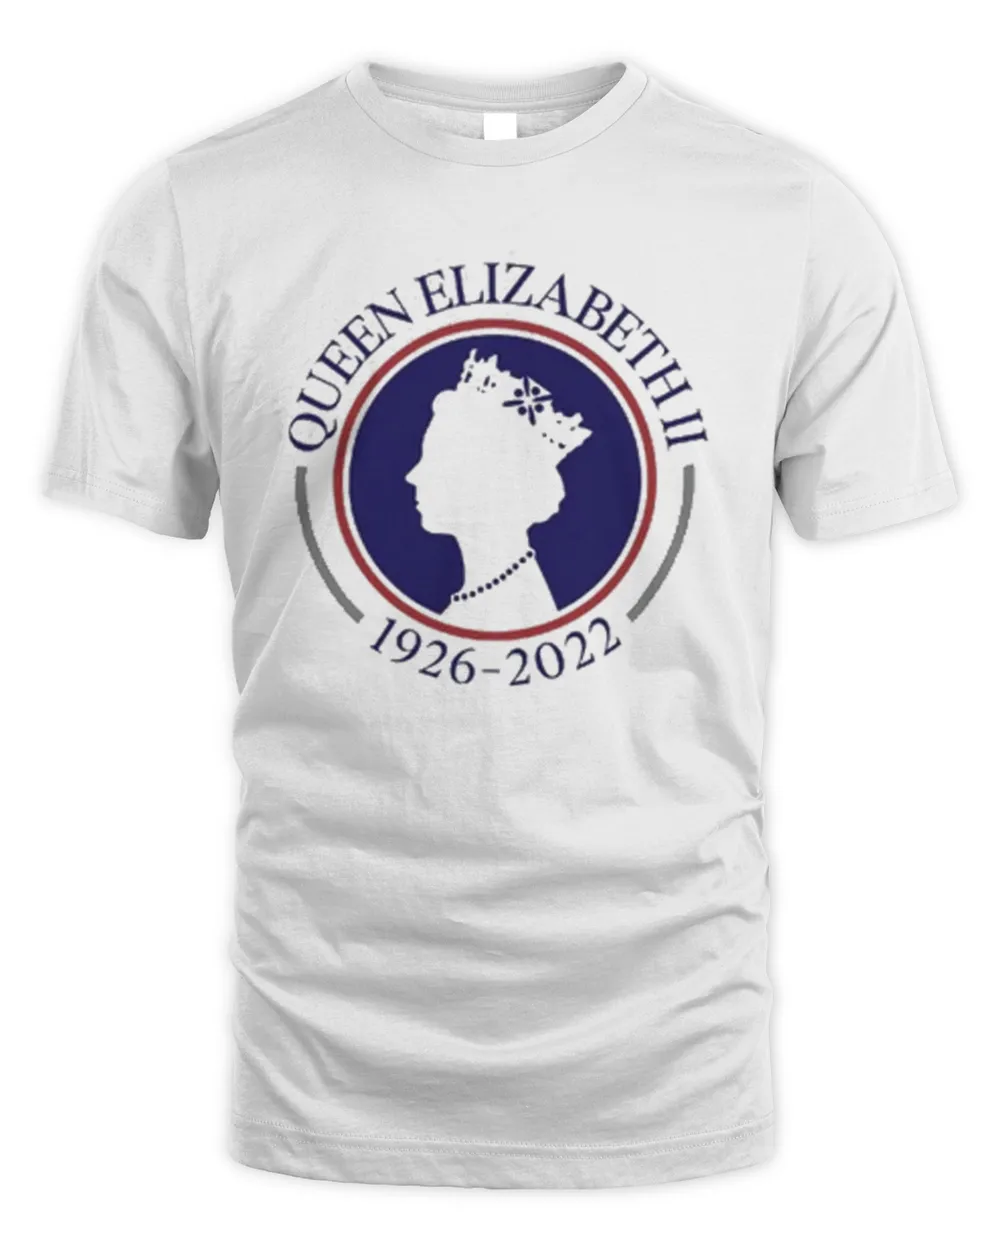 Rest In Peace Elizabeth RIP Queen Elizabeth 1926-2022 Shirt